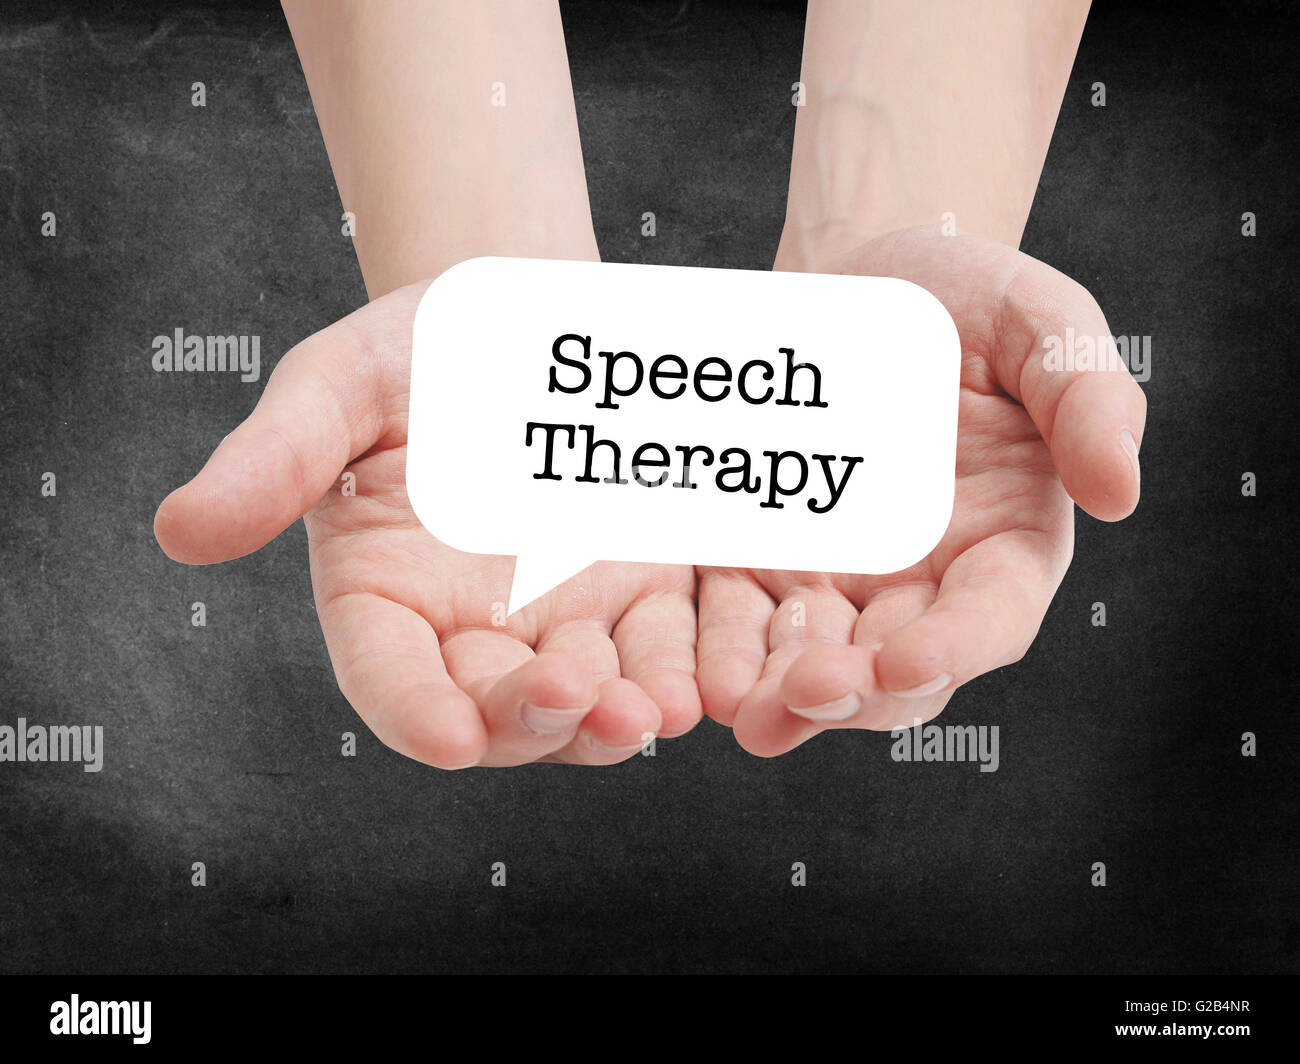 Terapia del lenguaje escrito en un speechbubble Foto de stock